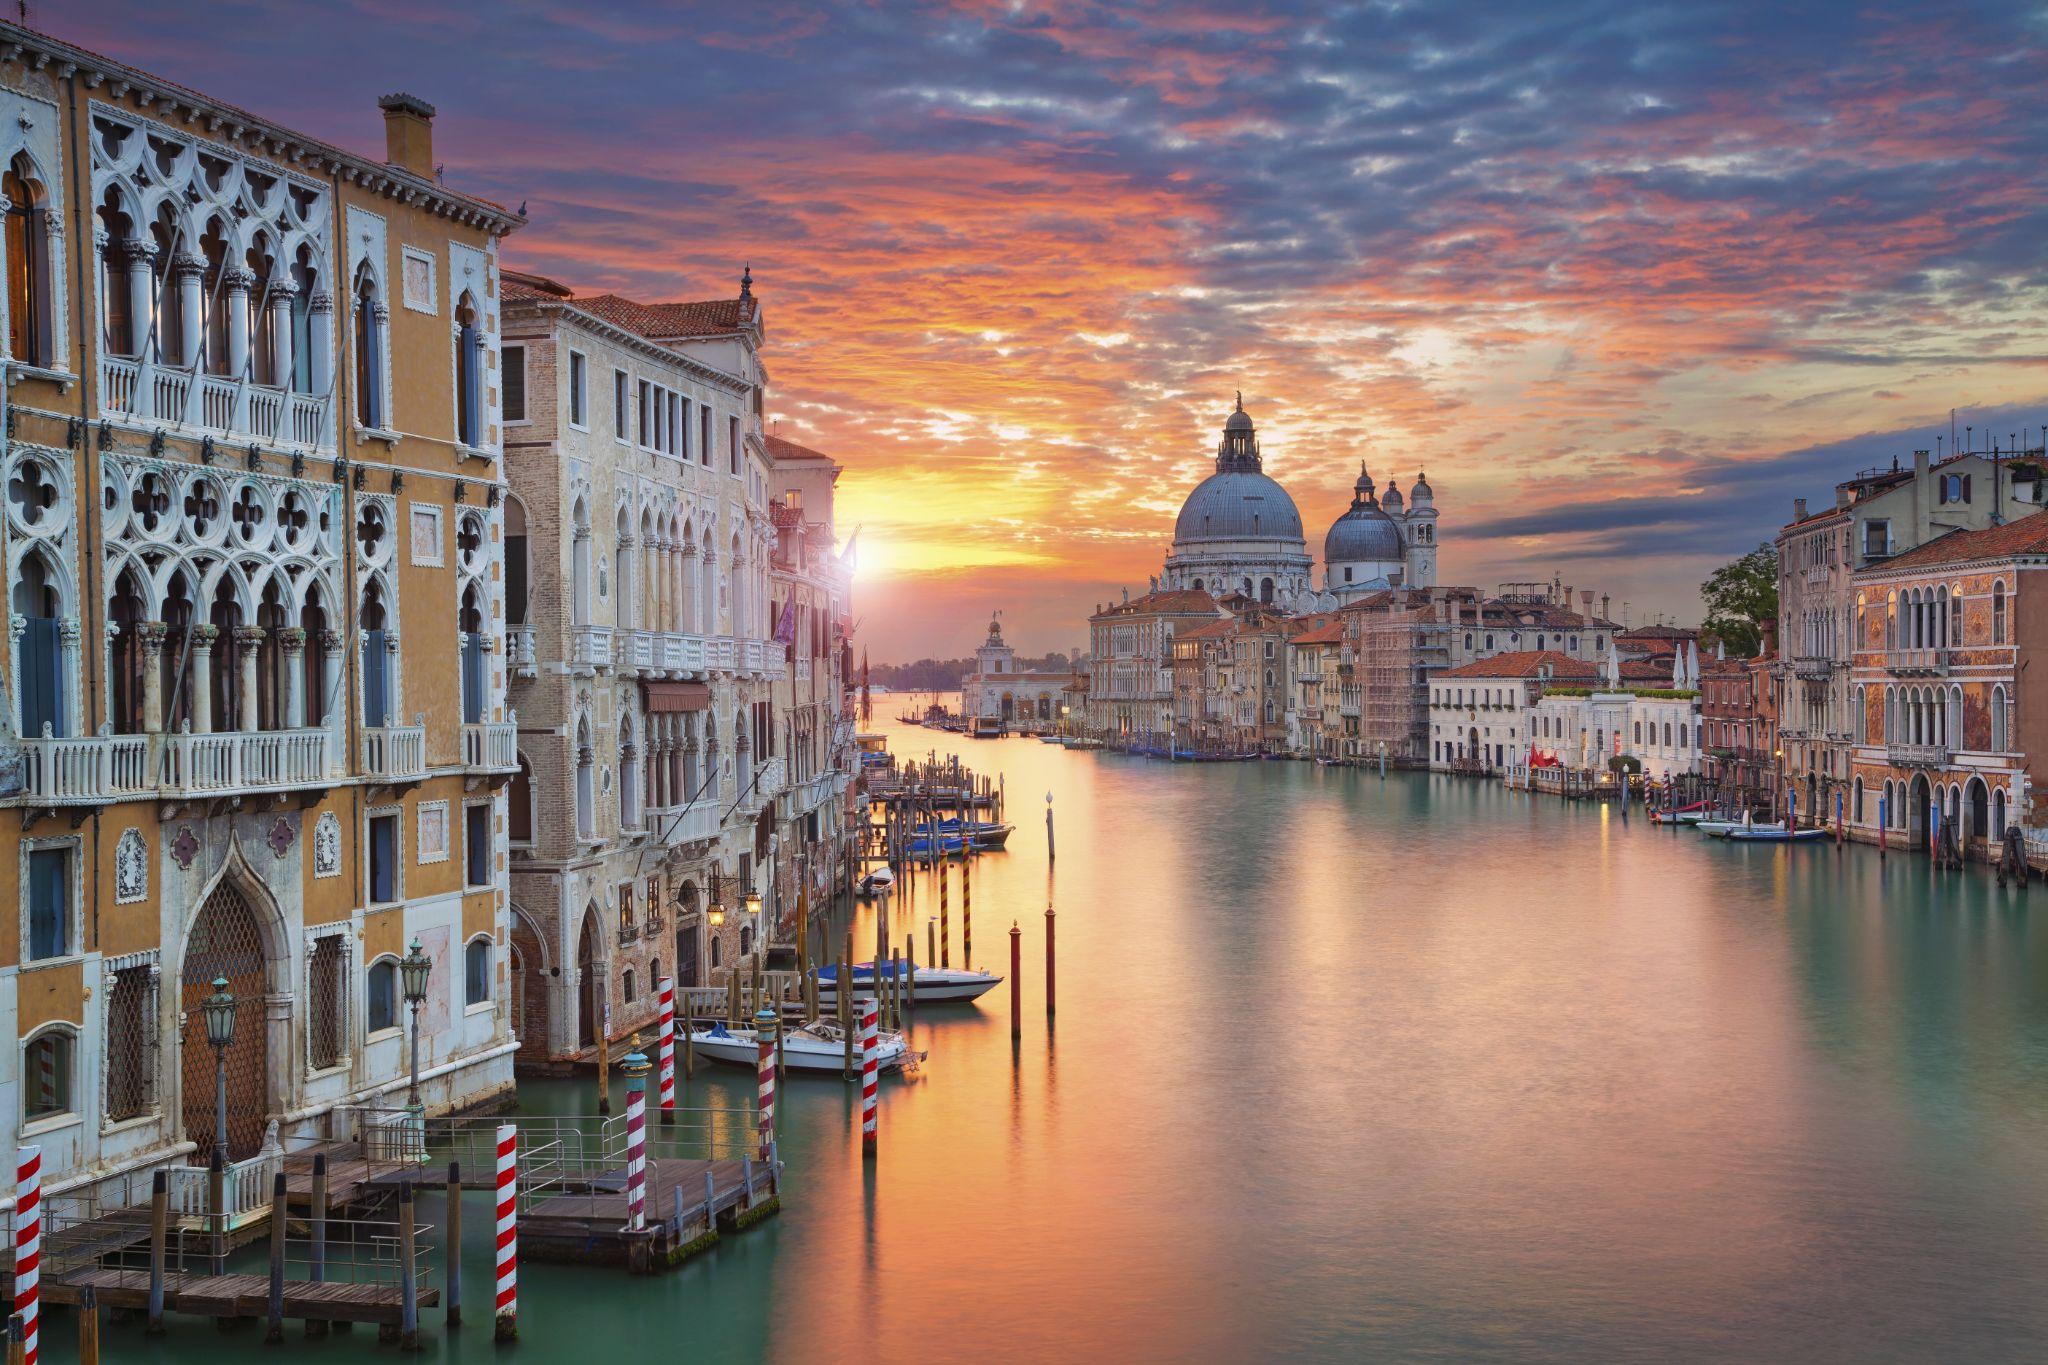 Image of Grand Canal in Venice, with Santa Maria della Salute Basilica in the background.